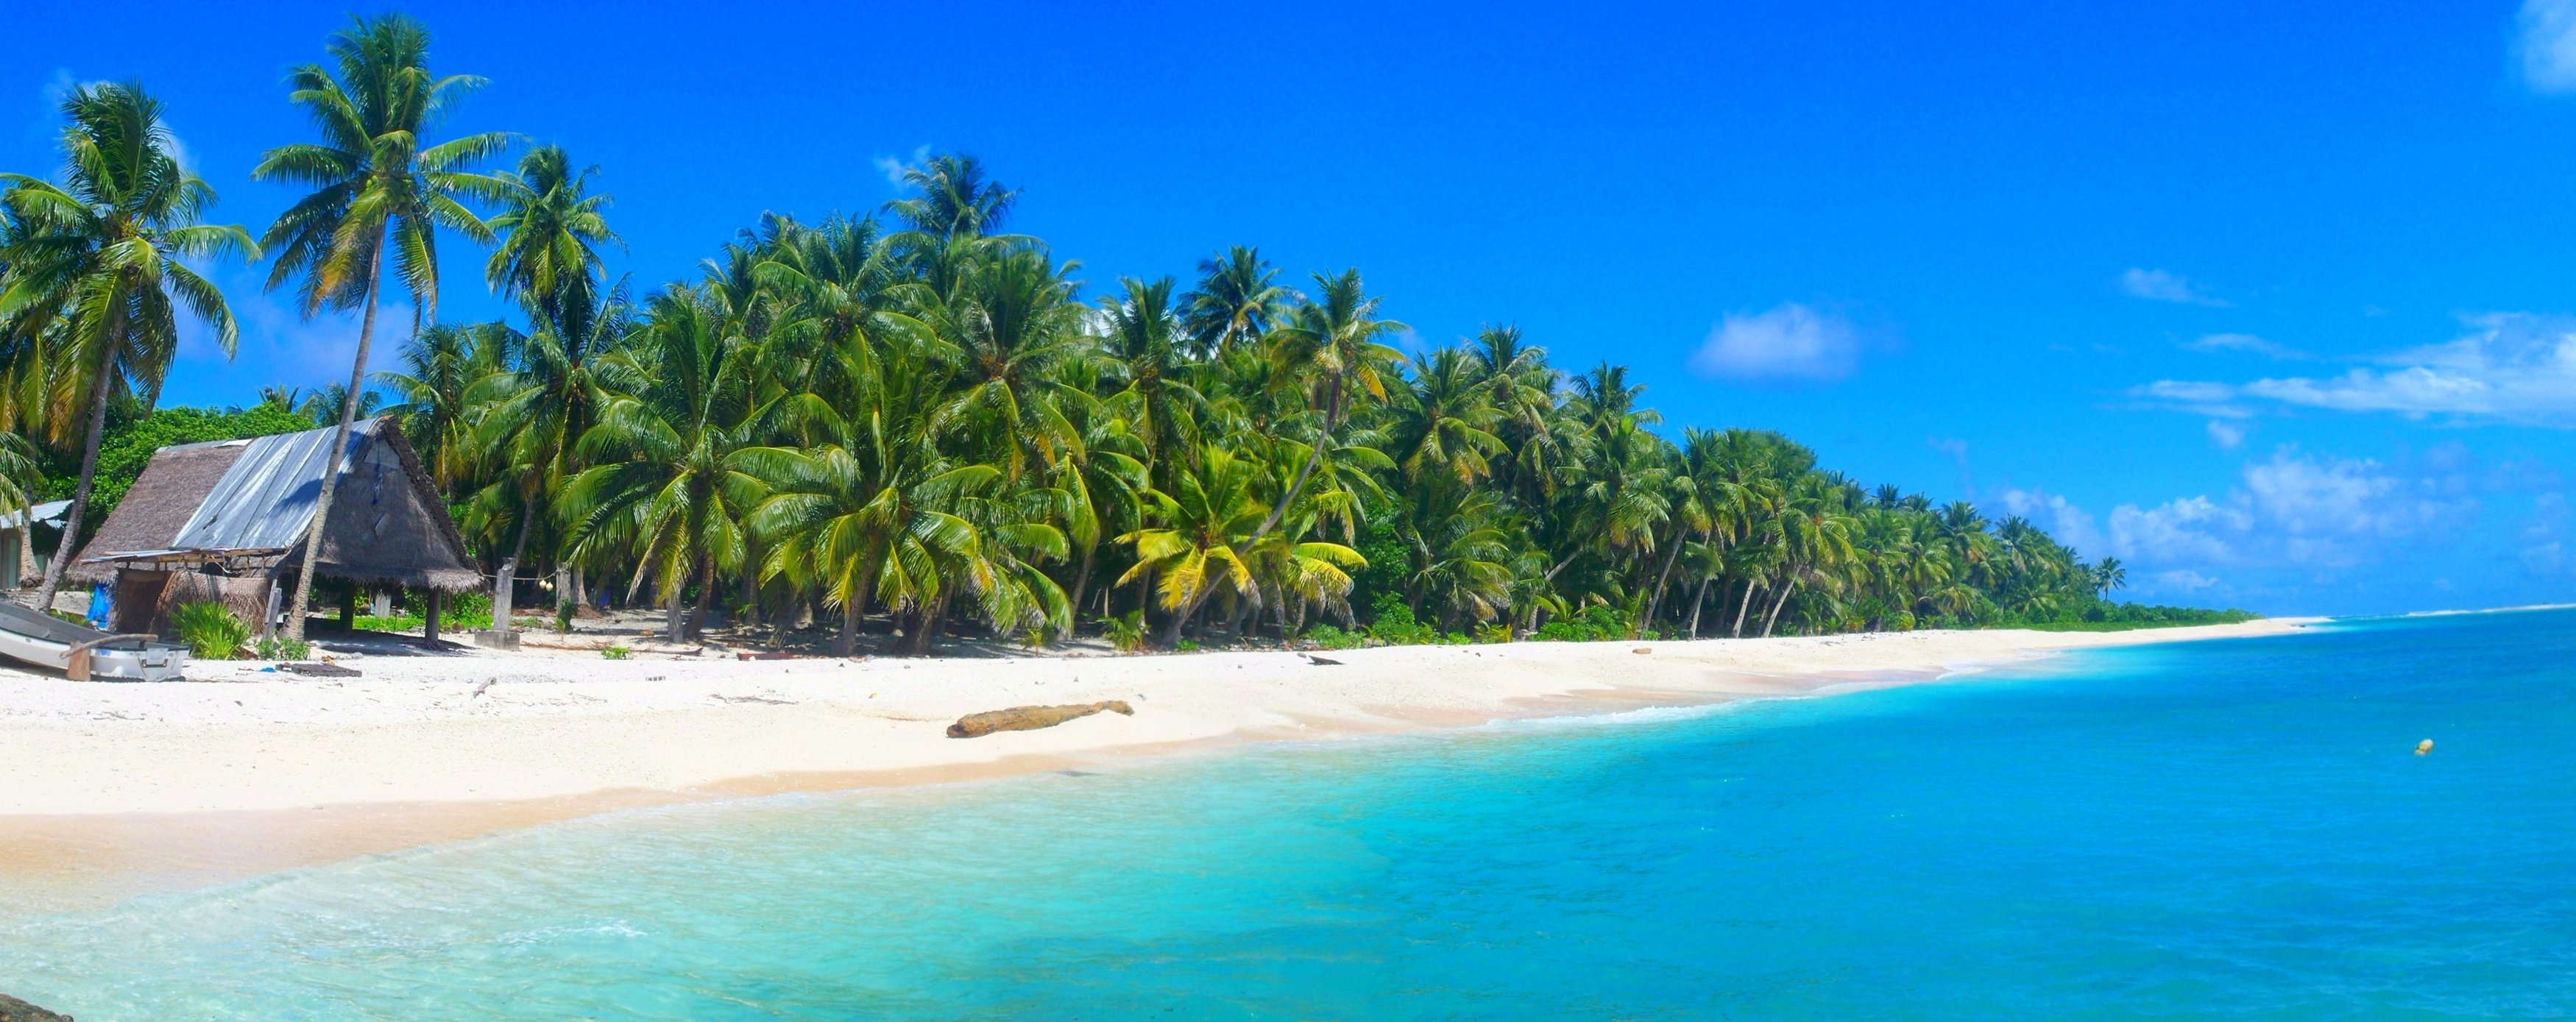 Micronesia, Turquoise sea, Tropical paradise, Boat activities, 3500x1390 Dual Screen Desktop